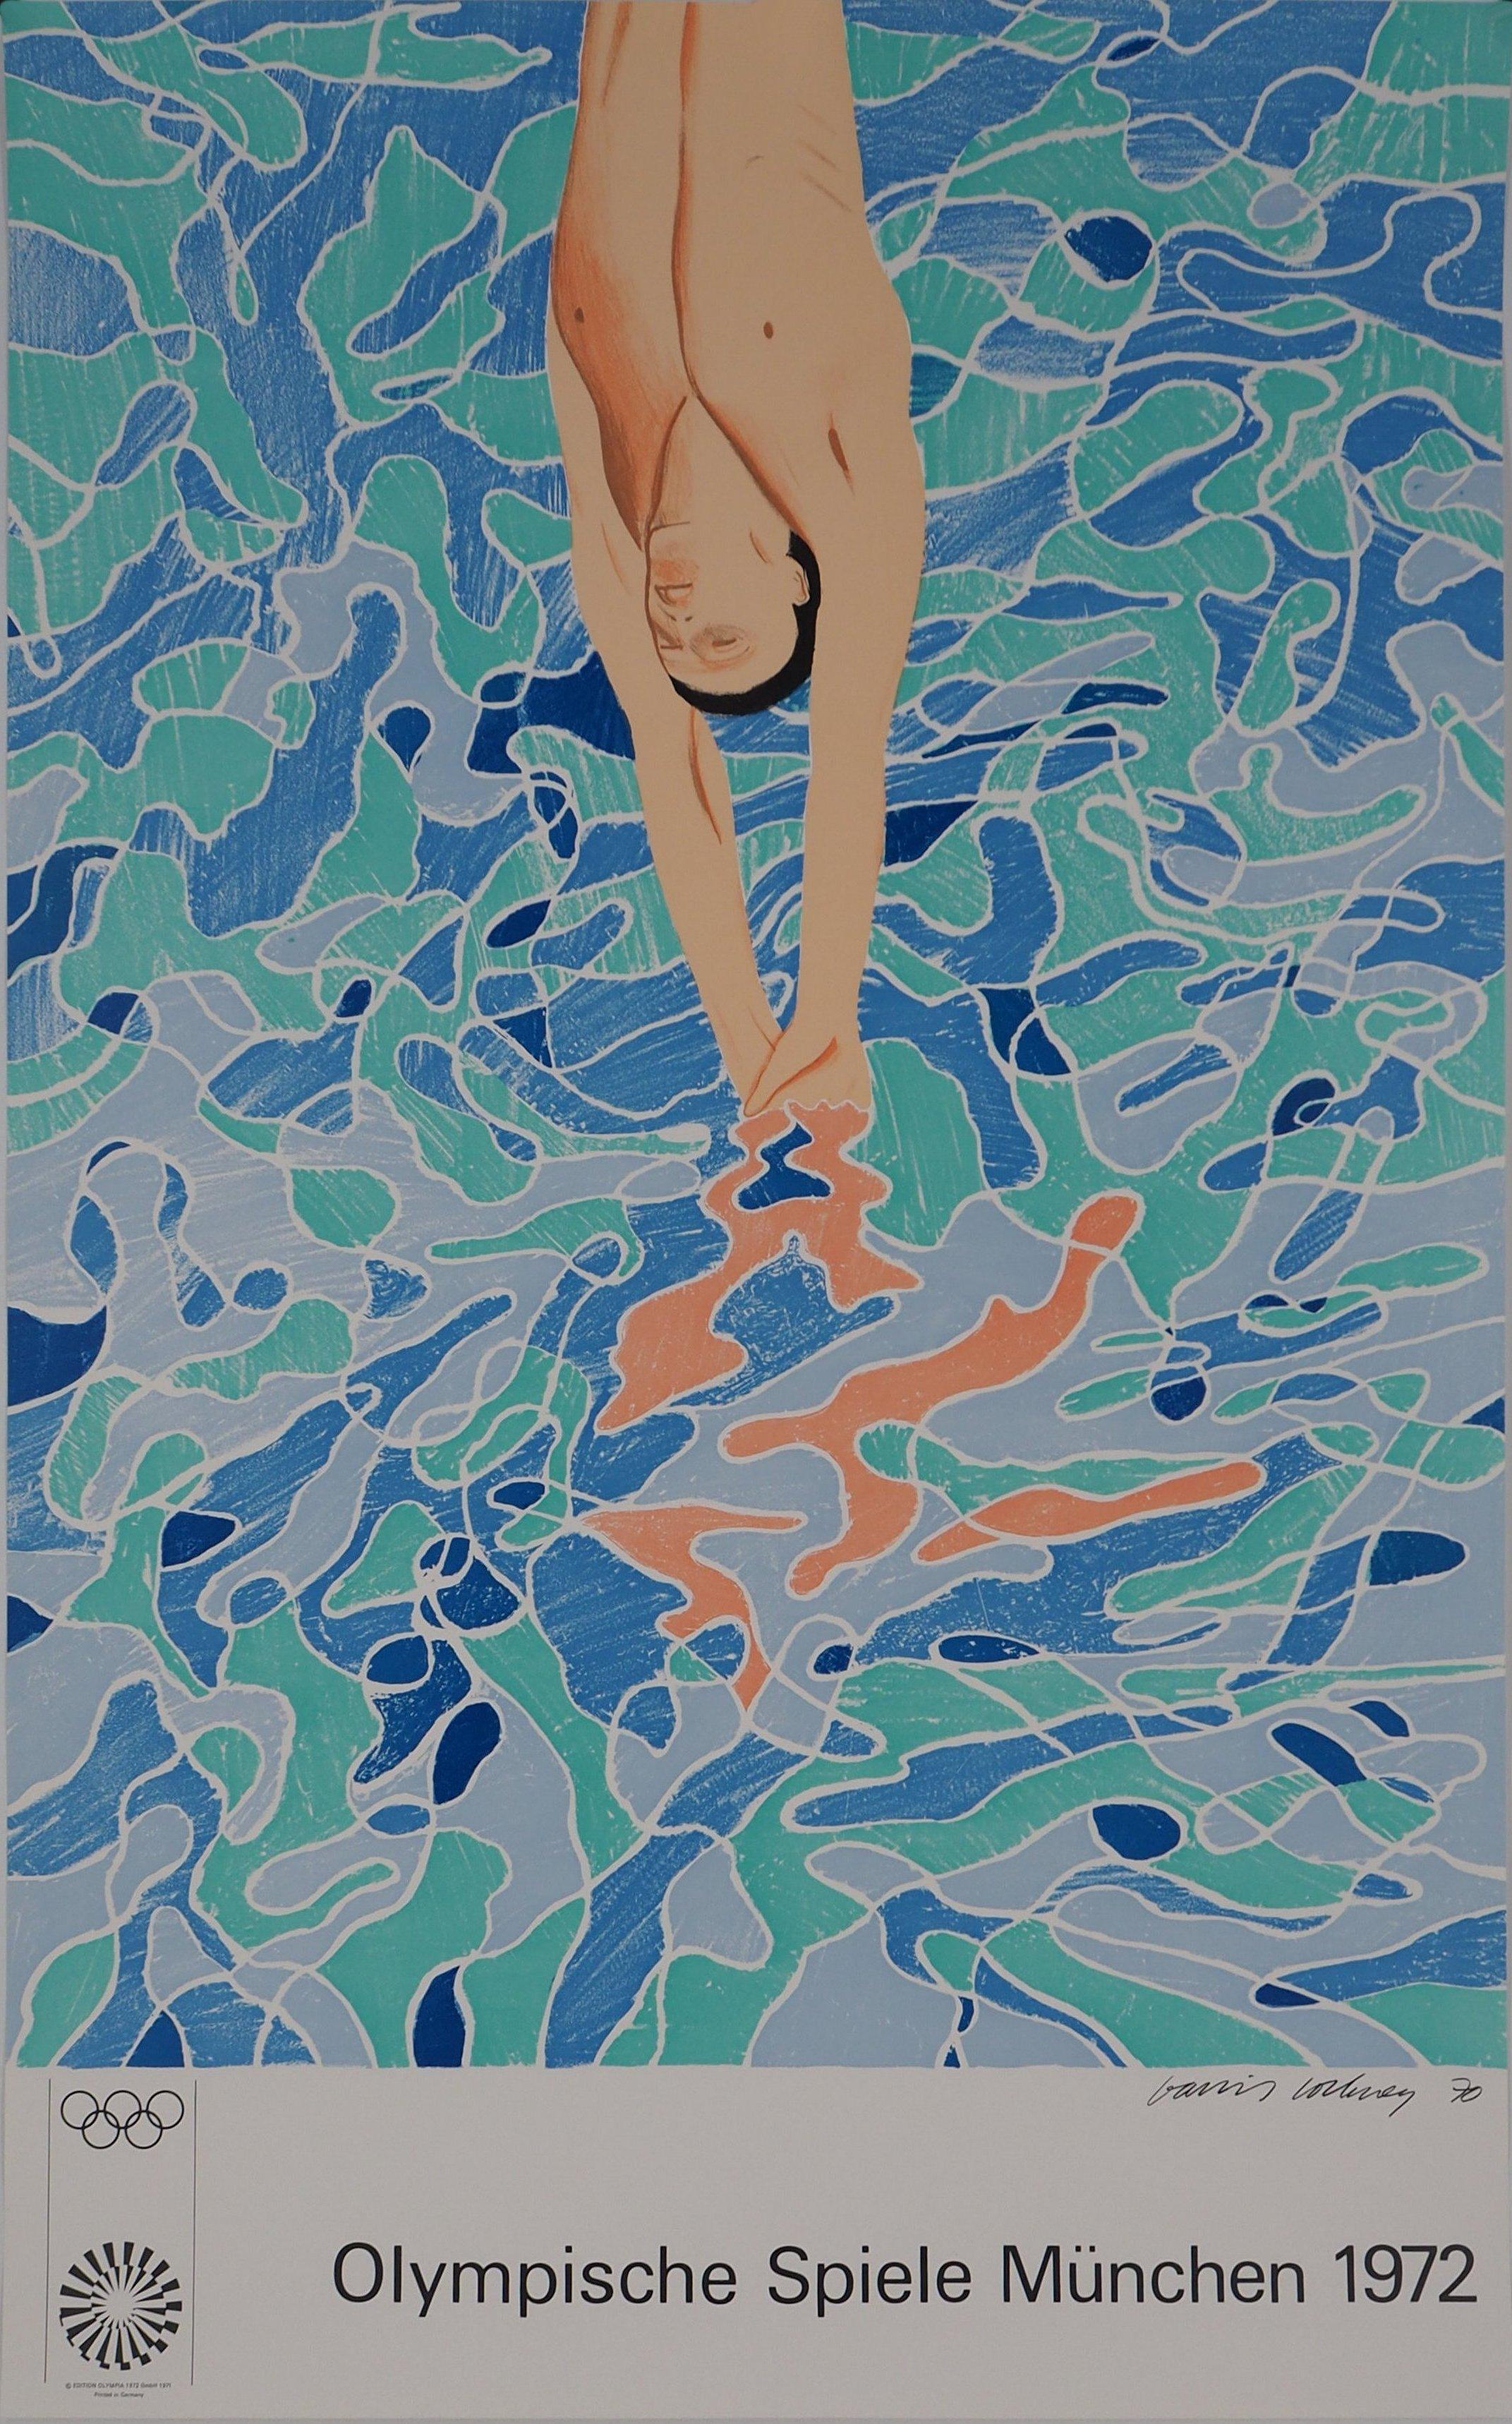 David Hockney Figurative Print - Pool Diver - Lithograph (Olympic Games Munich 1972)